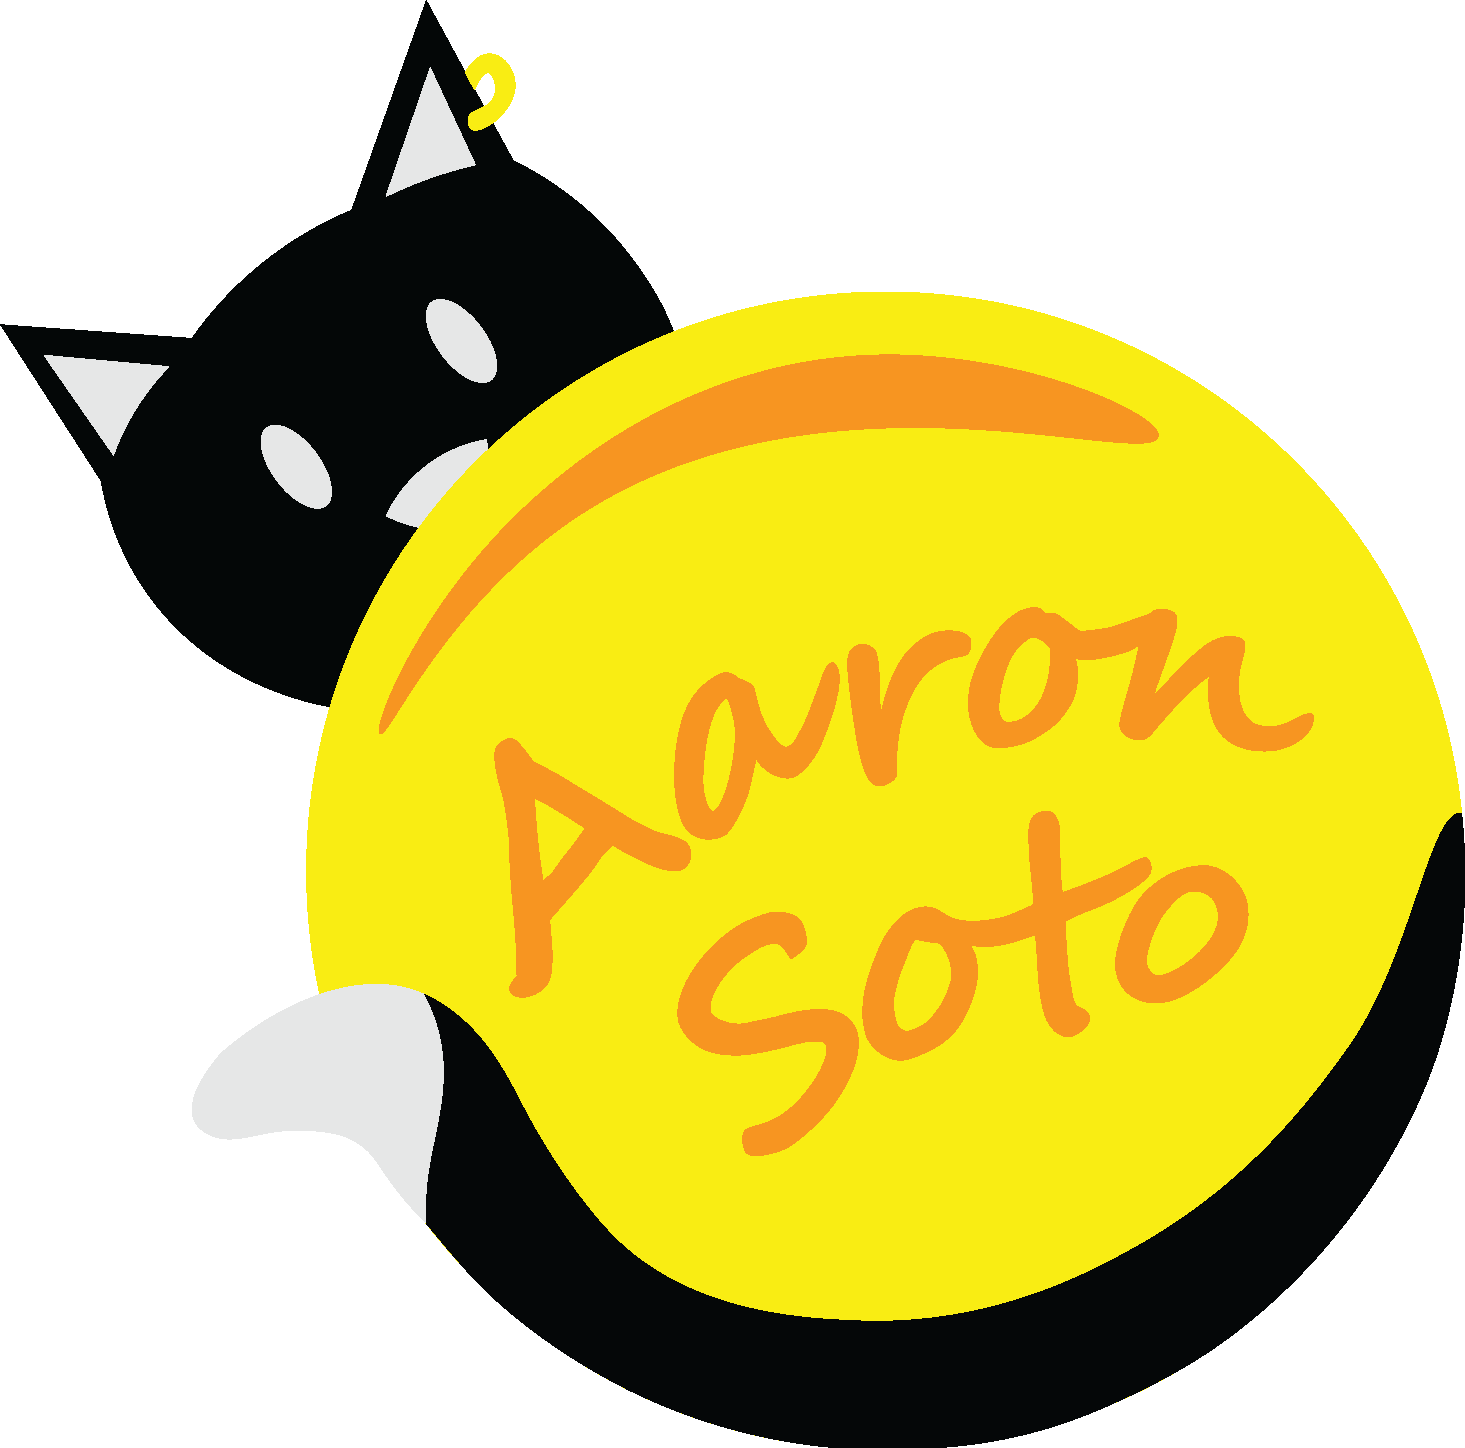 Aaron Soto